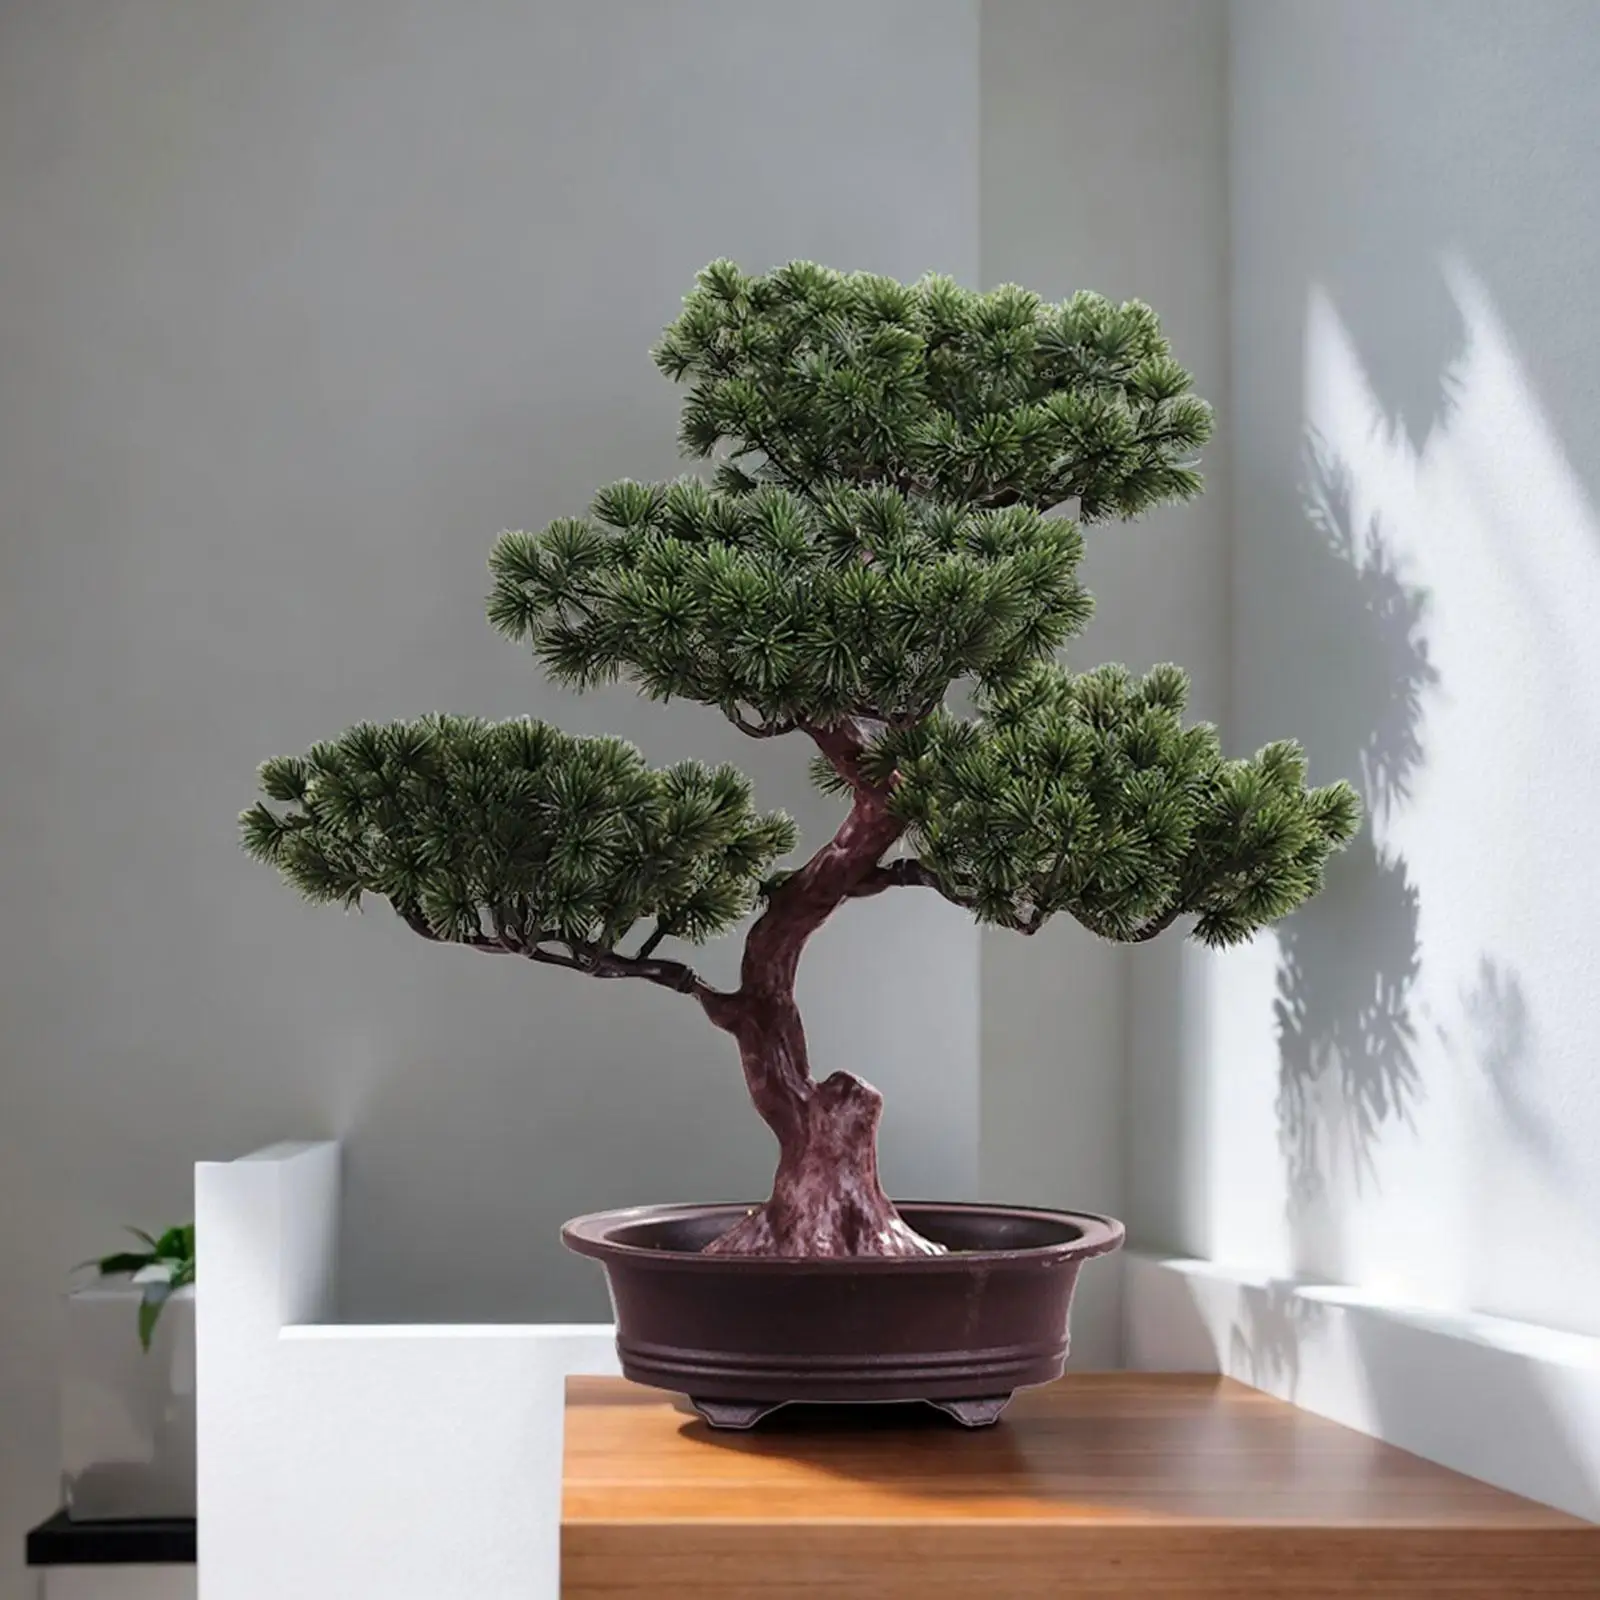 Artificial Bonsai Pine Tree Potted Plant Decoration Versatile Sturdy Realistic